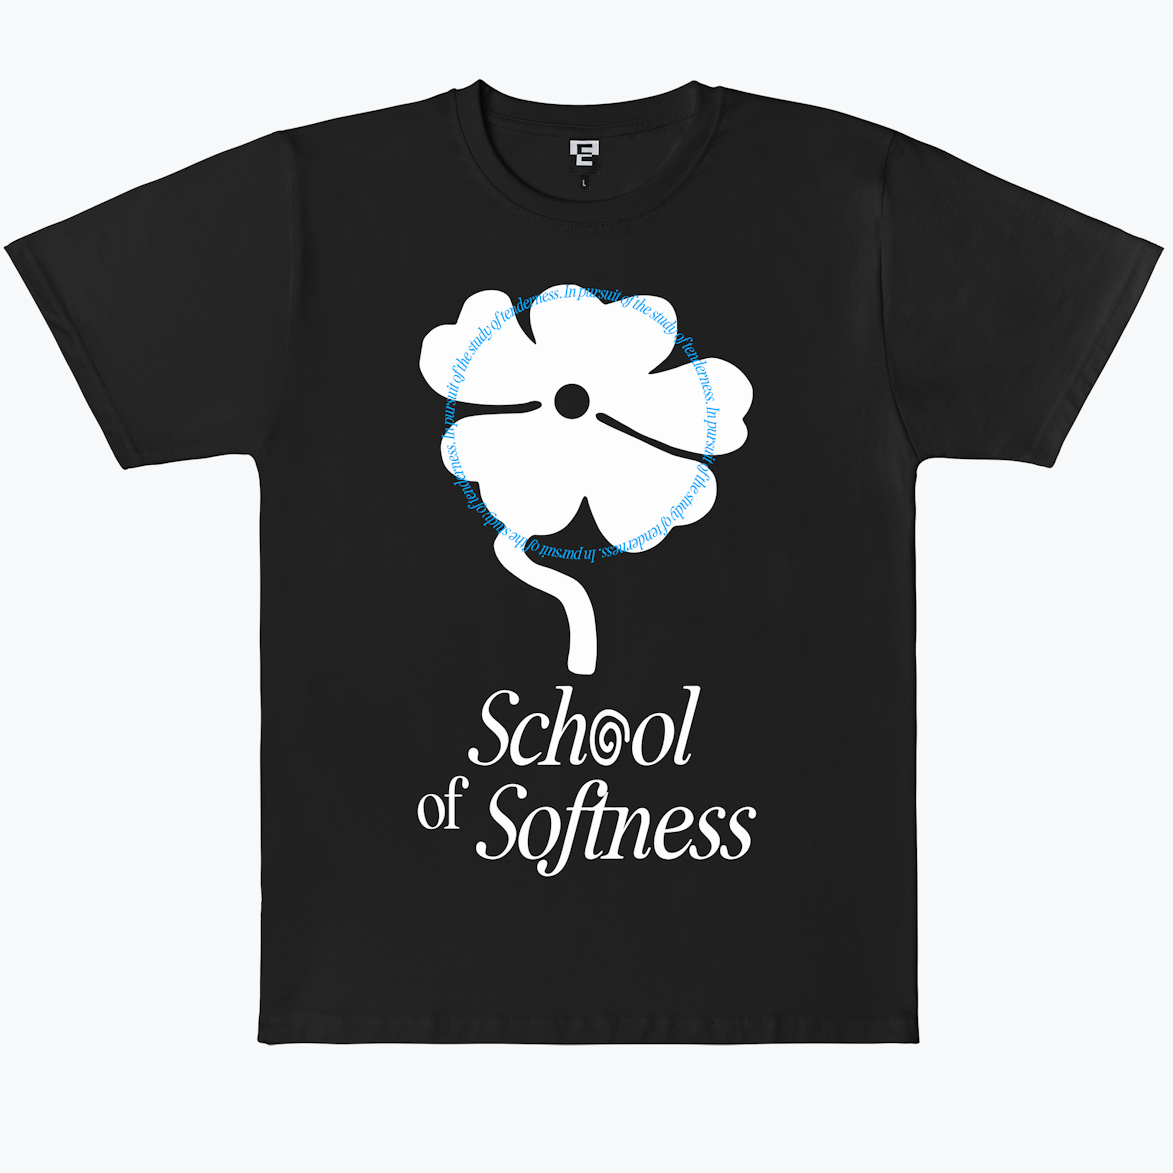 School of Softness